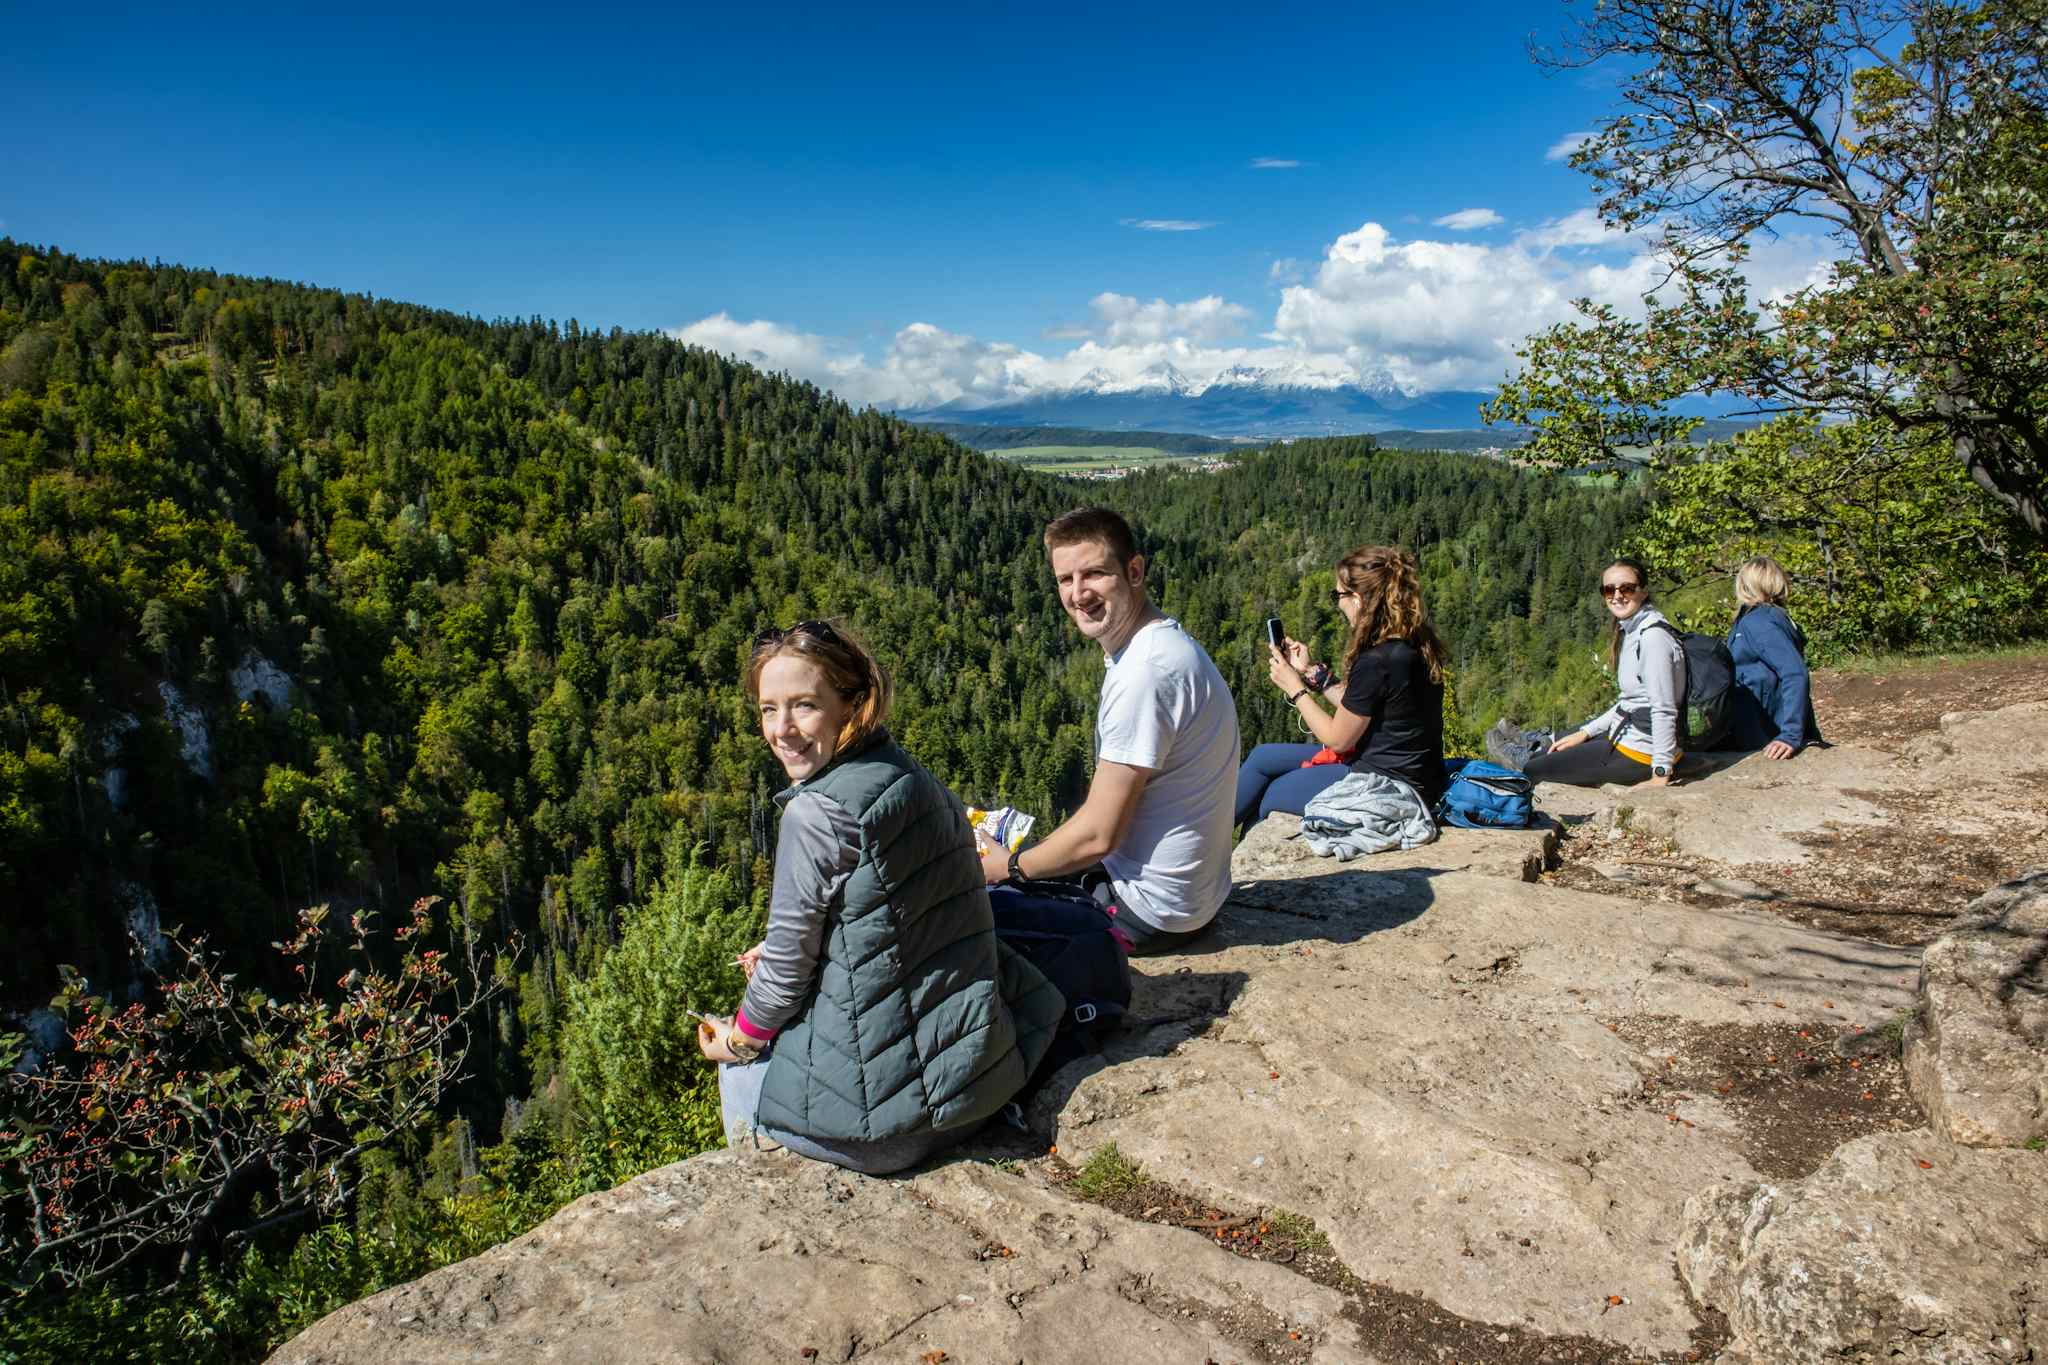 Slovakia - Slovak Paradise National Park
Host image - Slovakation